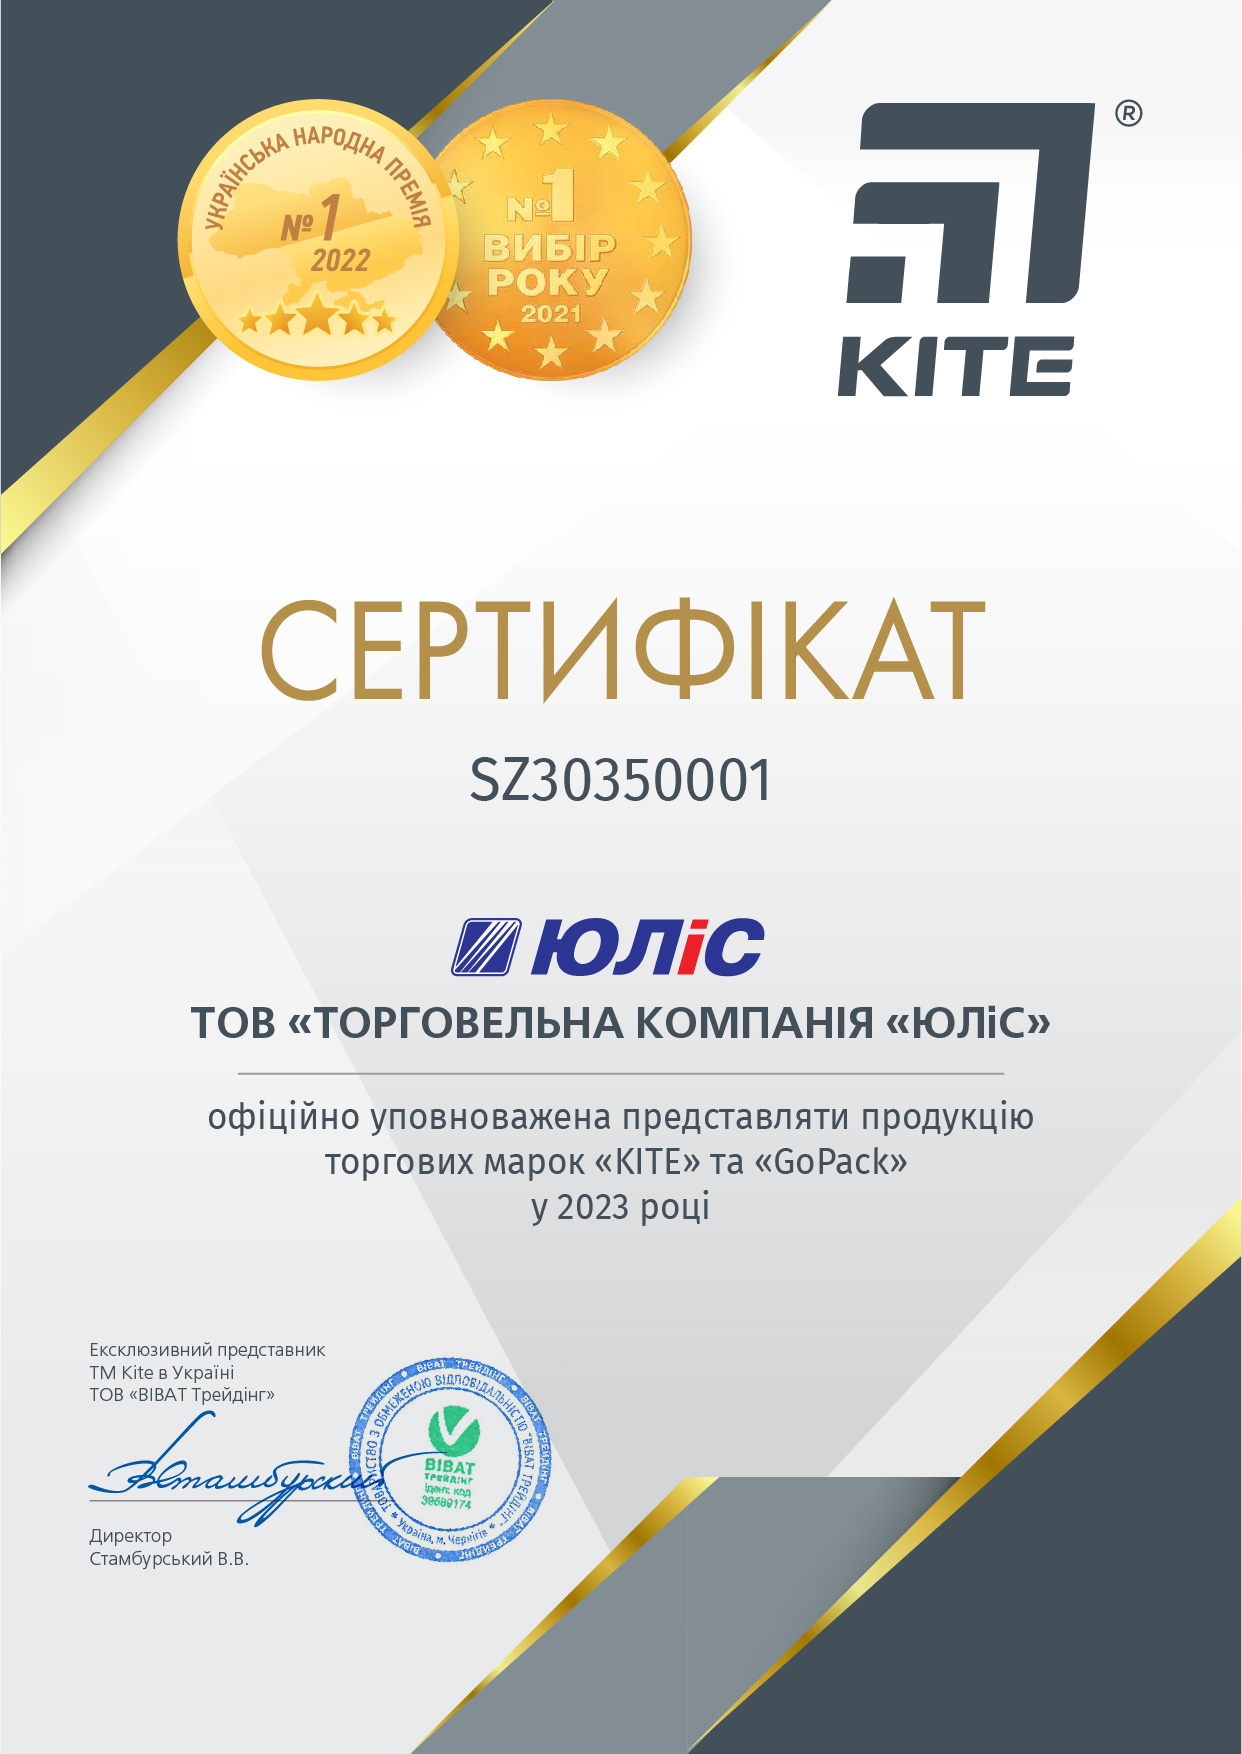 Сертифікат ТМ "Kite" та "GoPack"